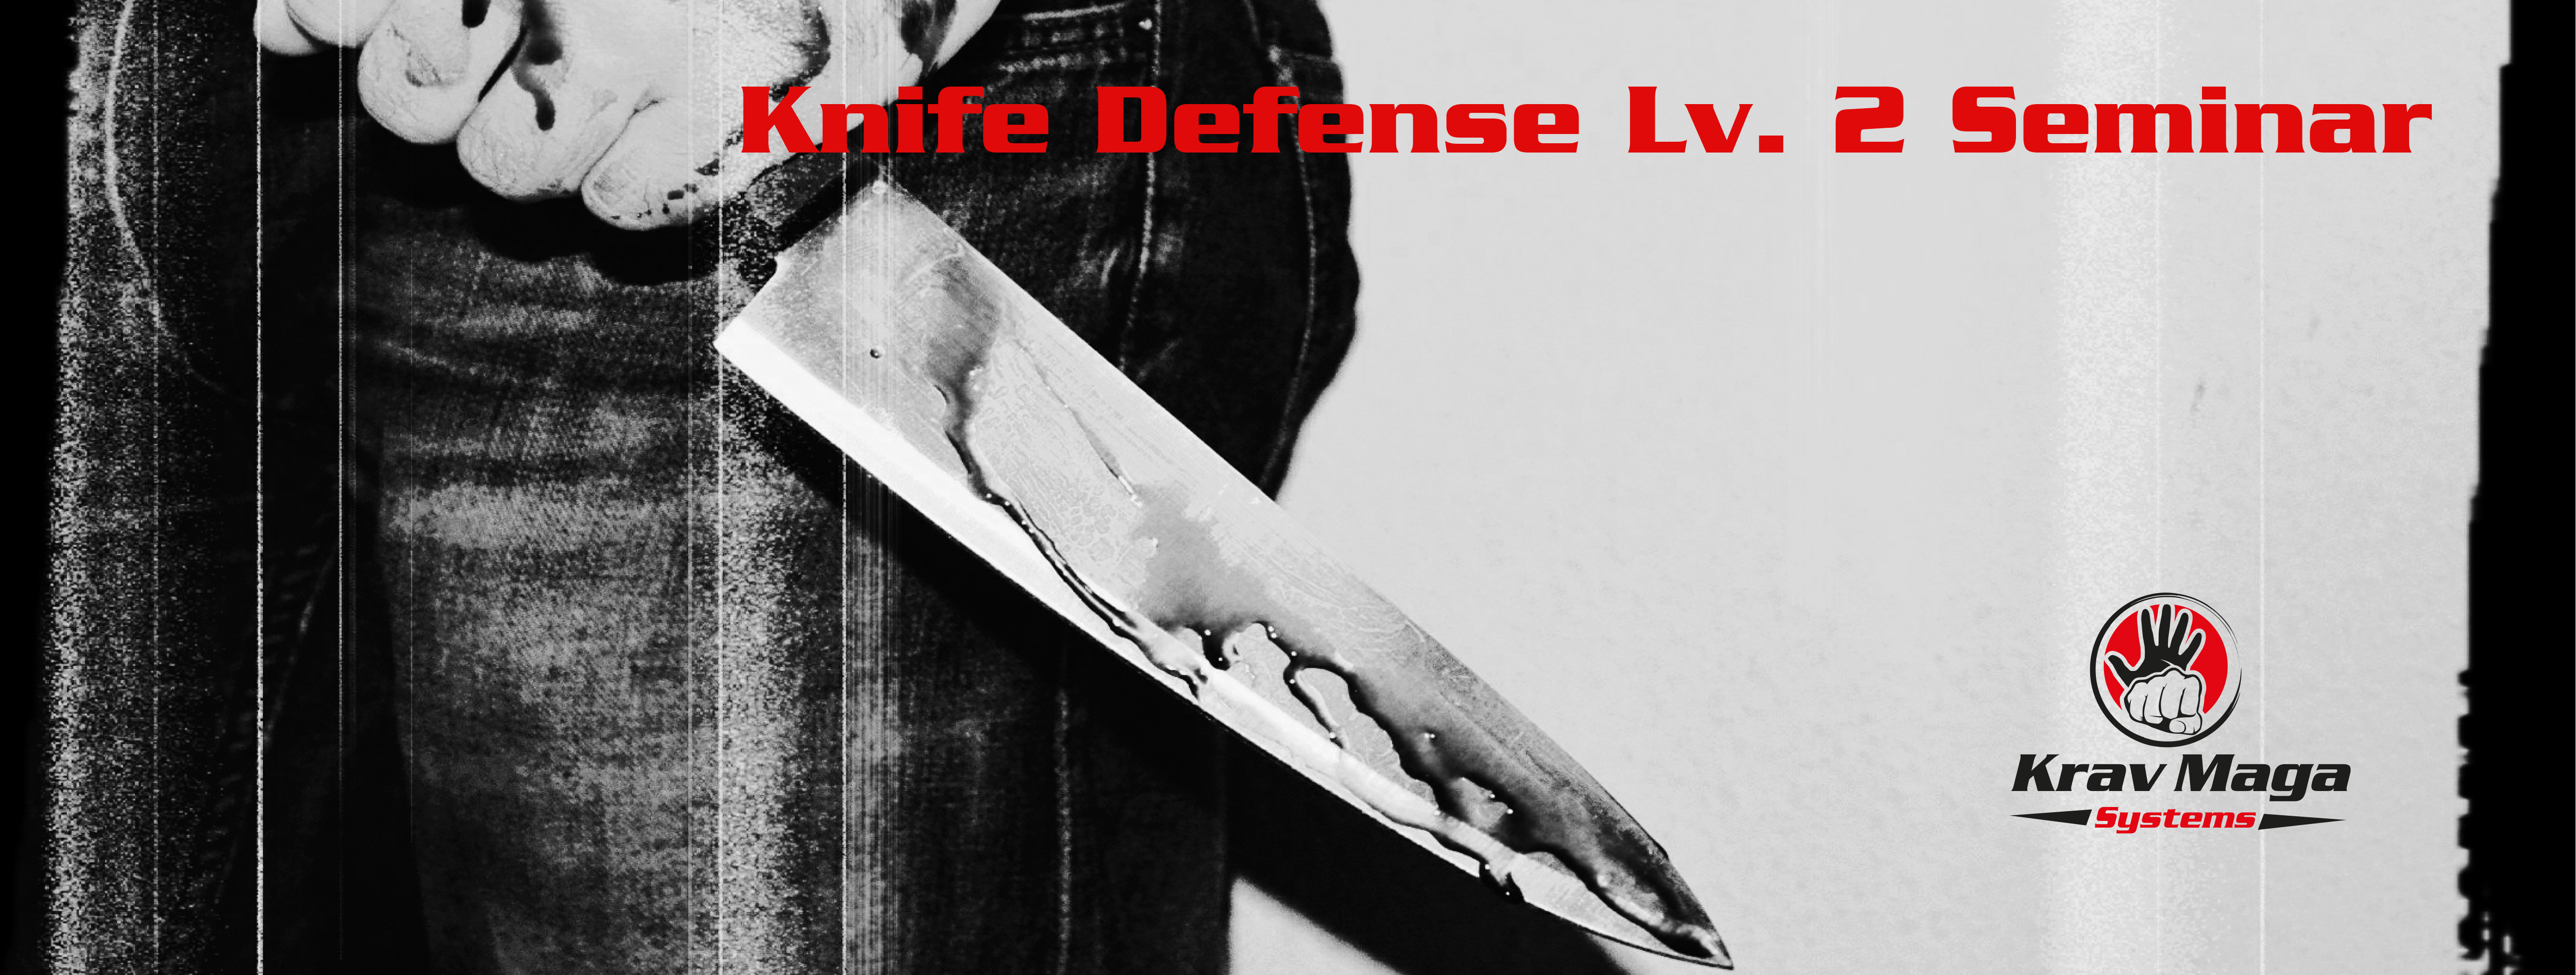 Knife Defense Lv. 2